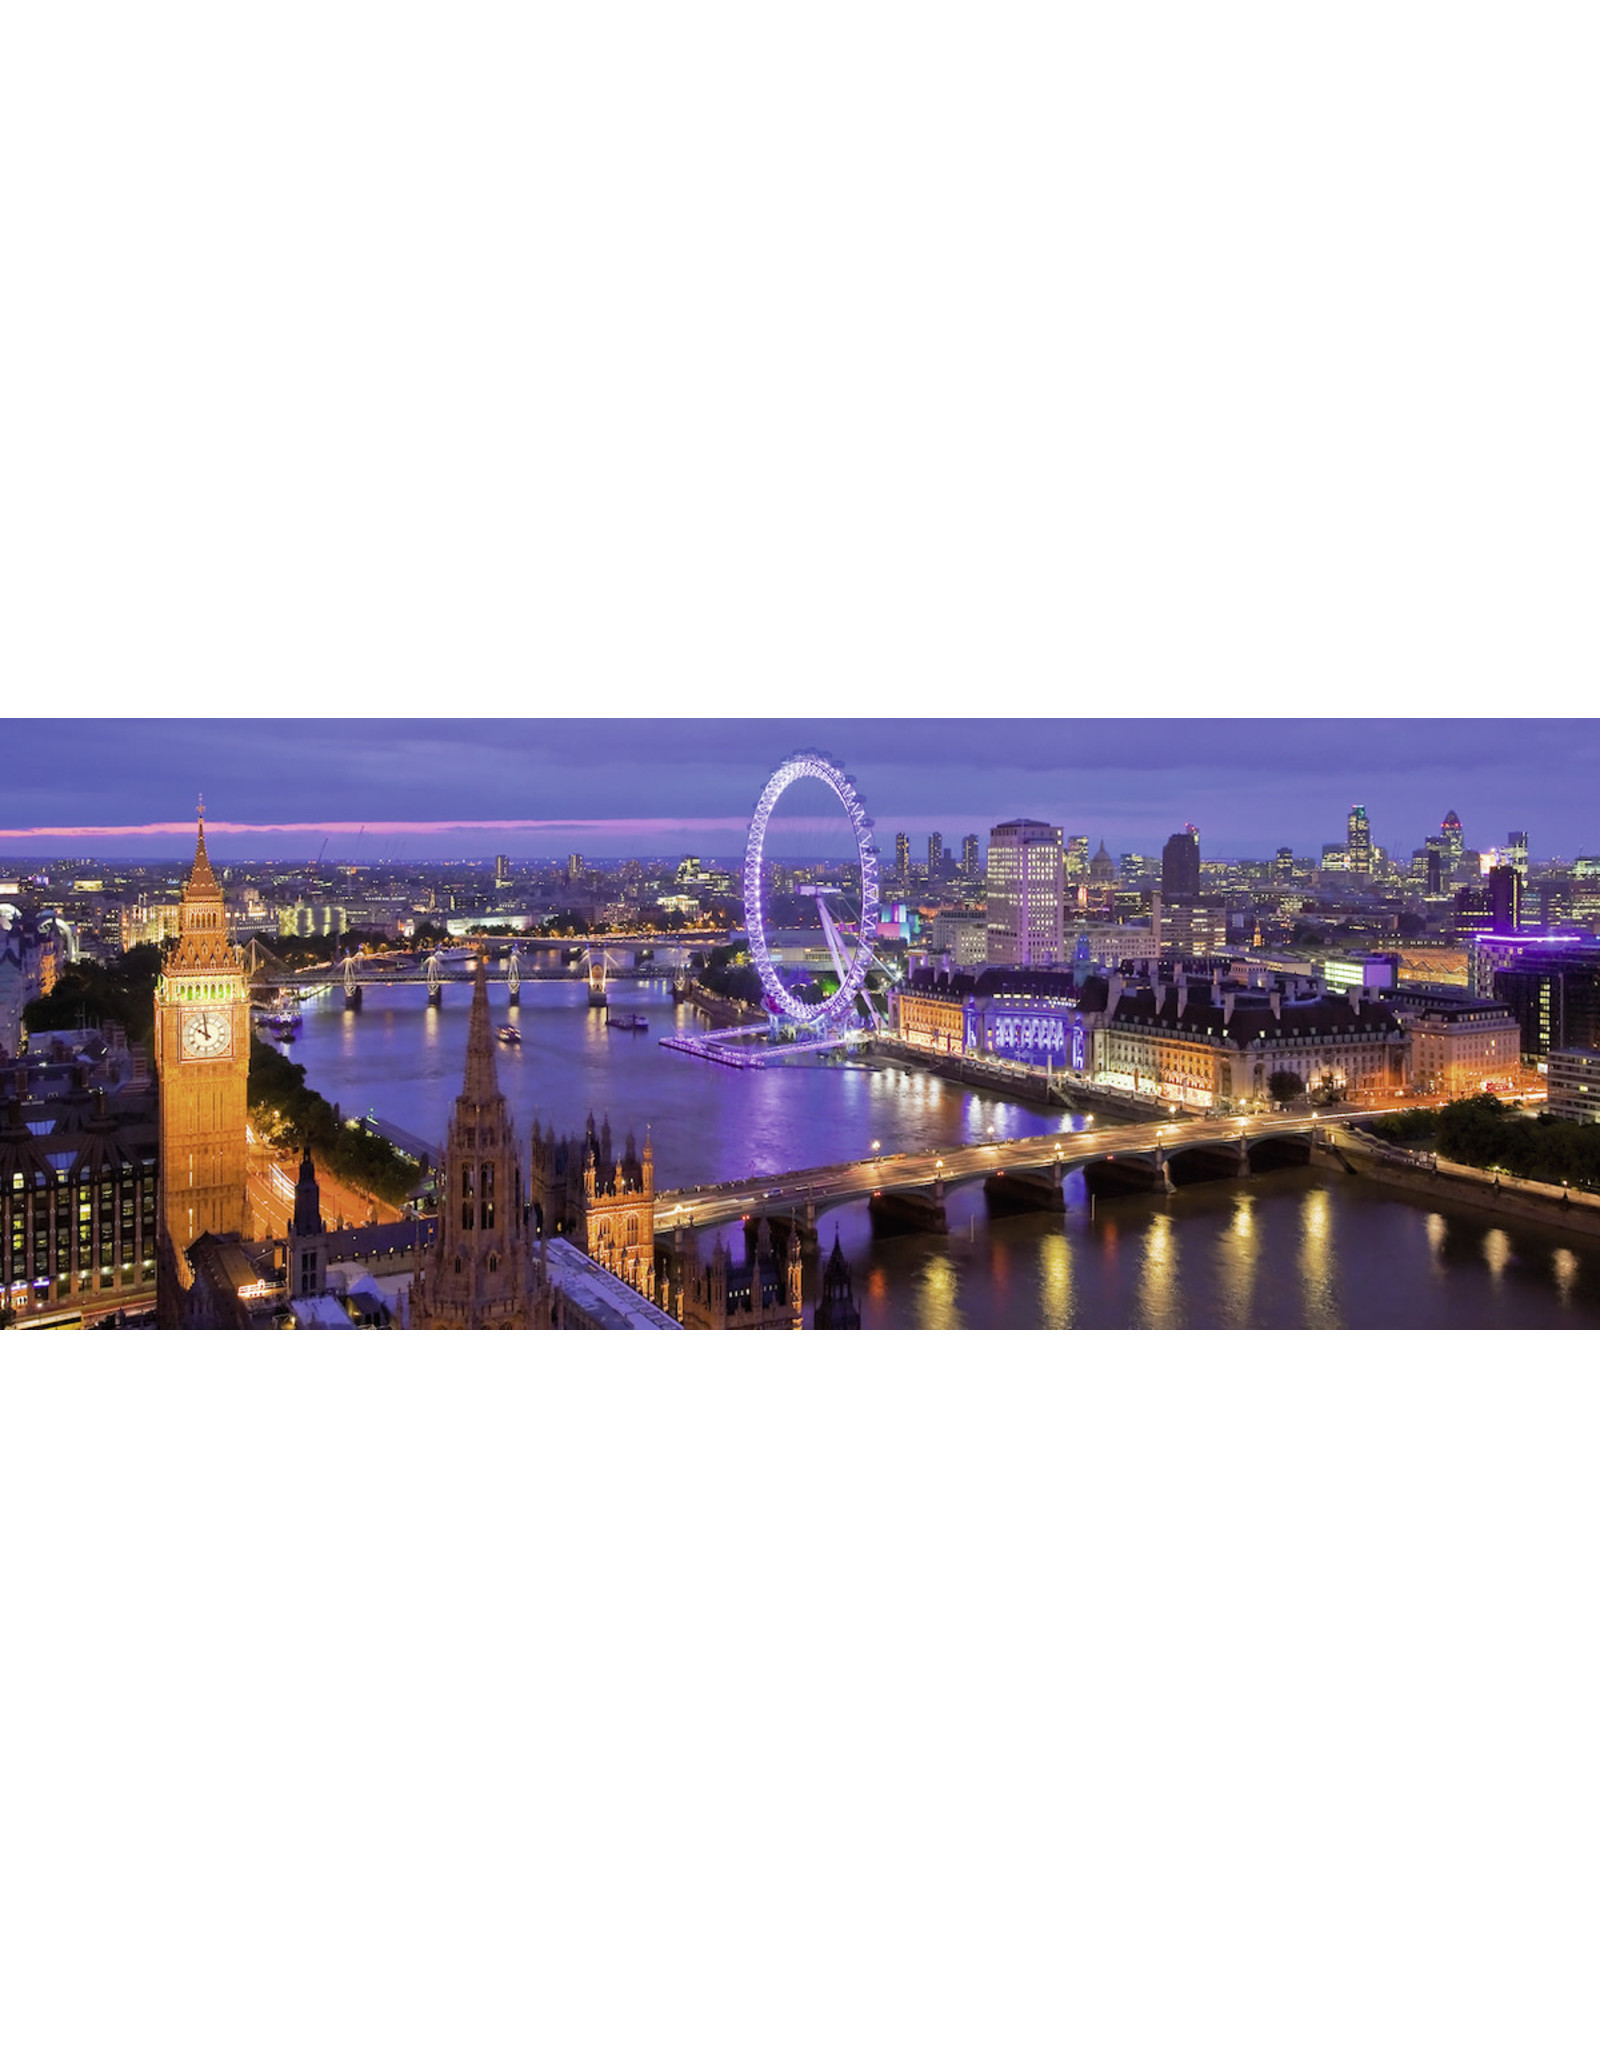 Ravensburger Ravensburger Puzzel  Panorama 150649 Londen bij Nacht  (1000 stukjes)